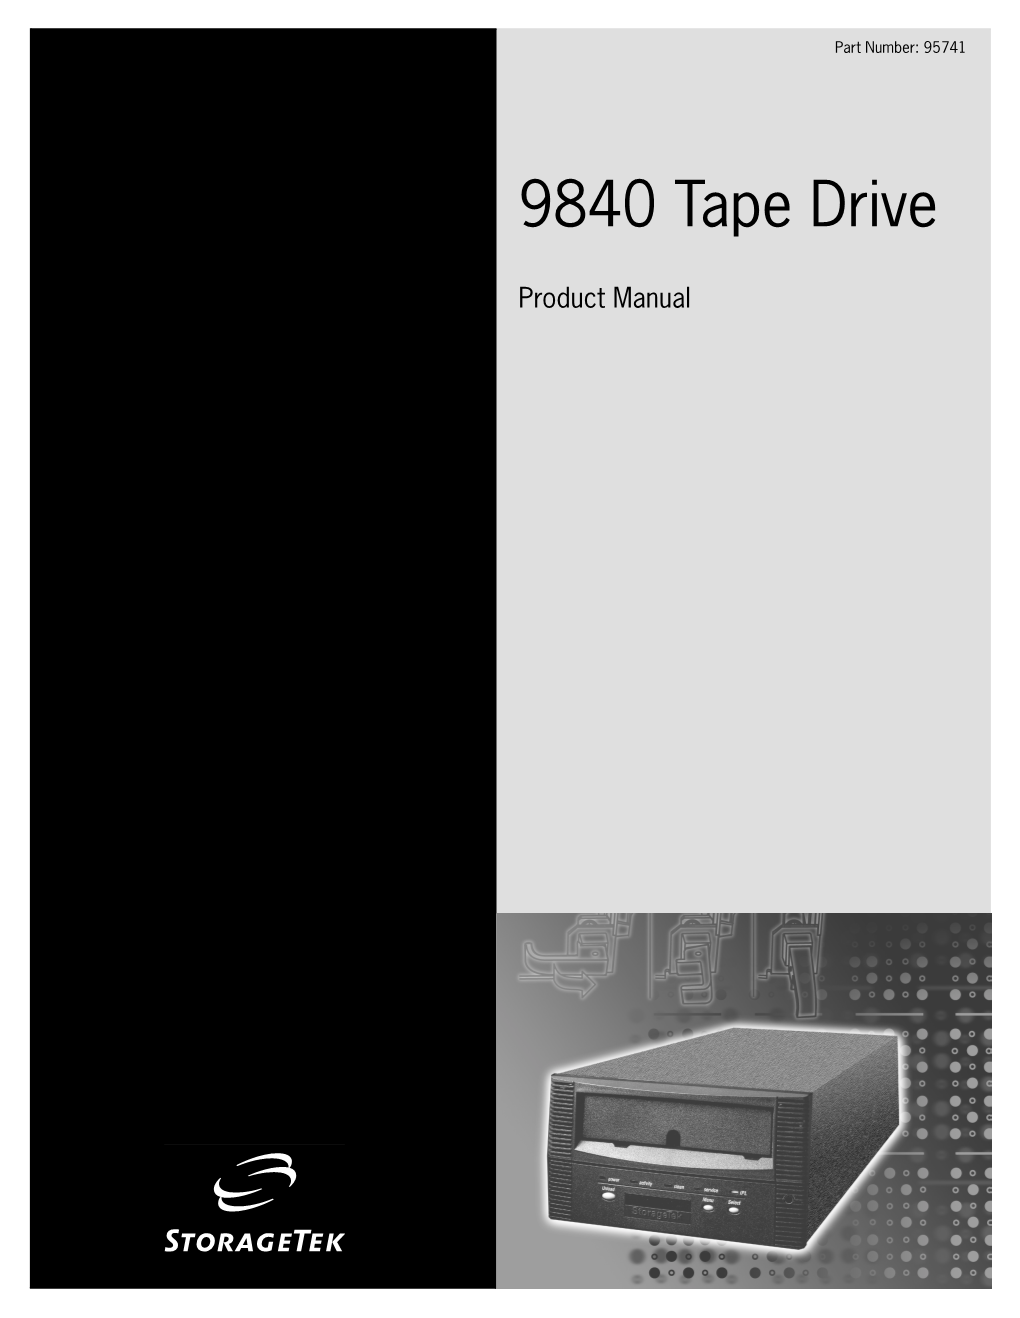 9840 Tape Drive Product Manual